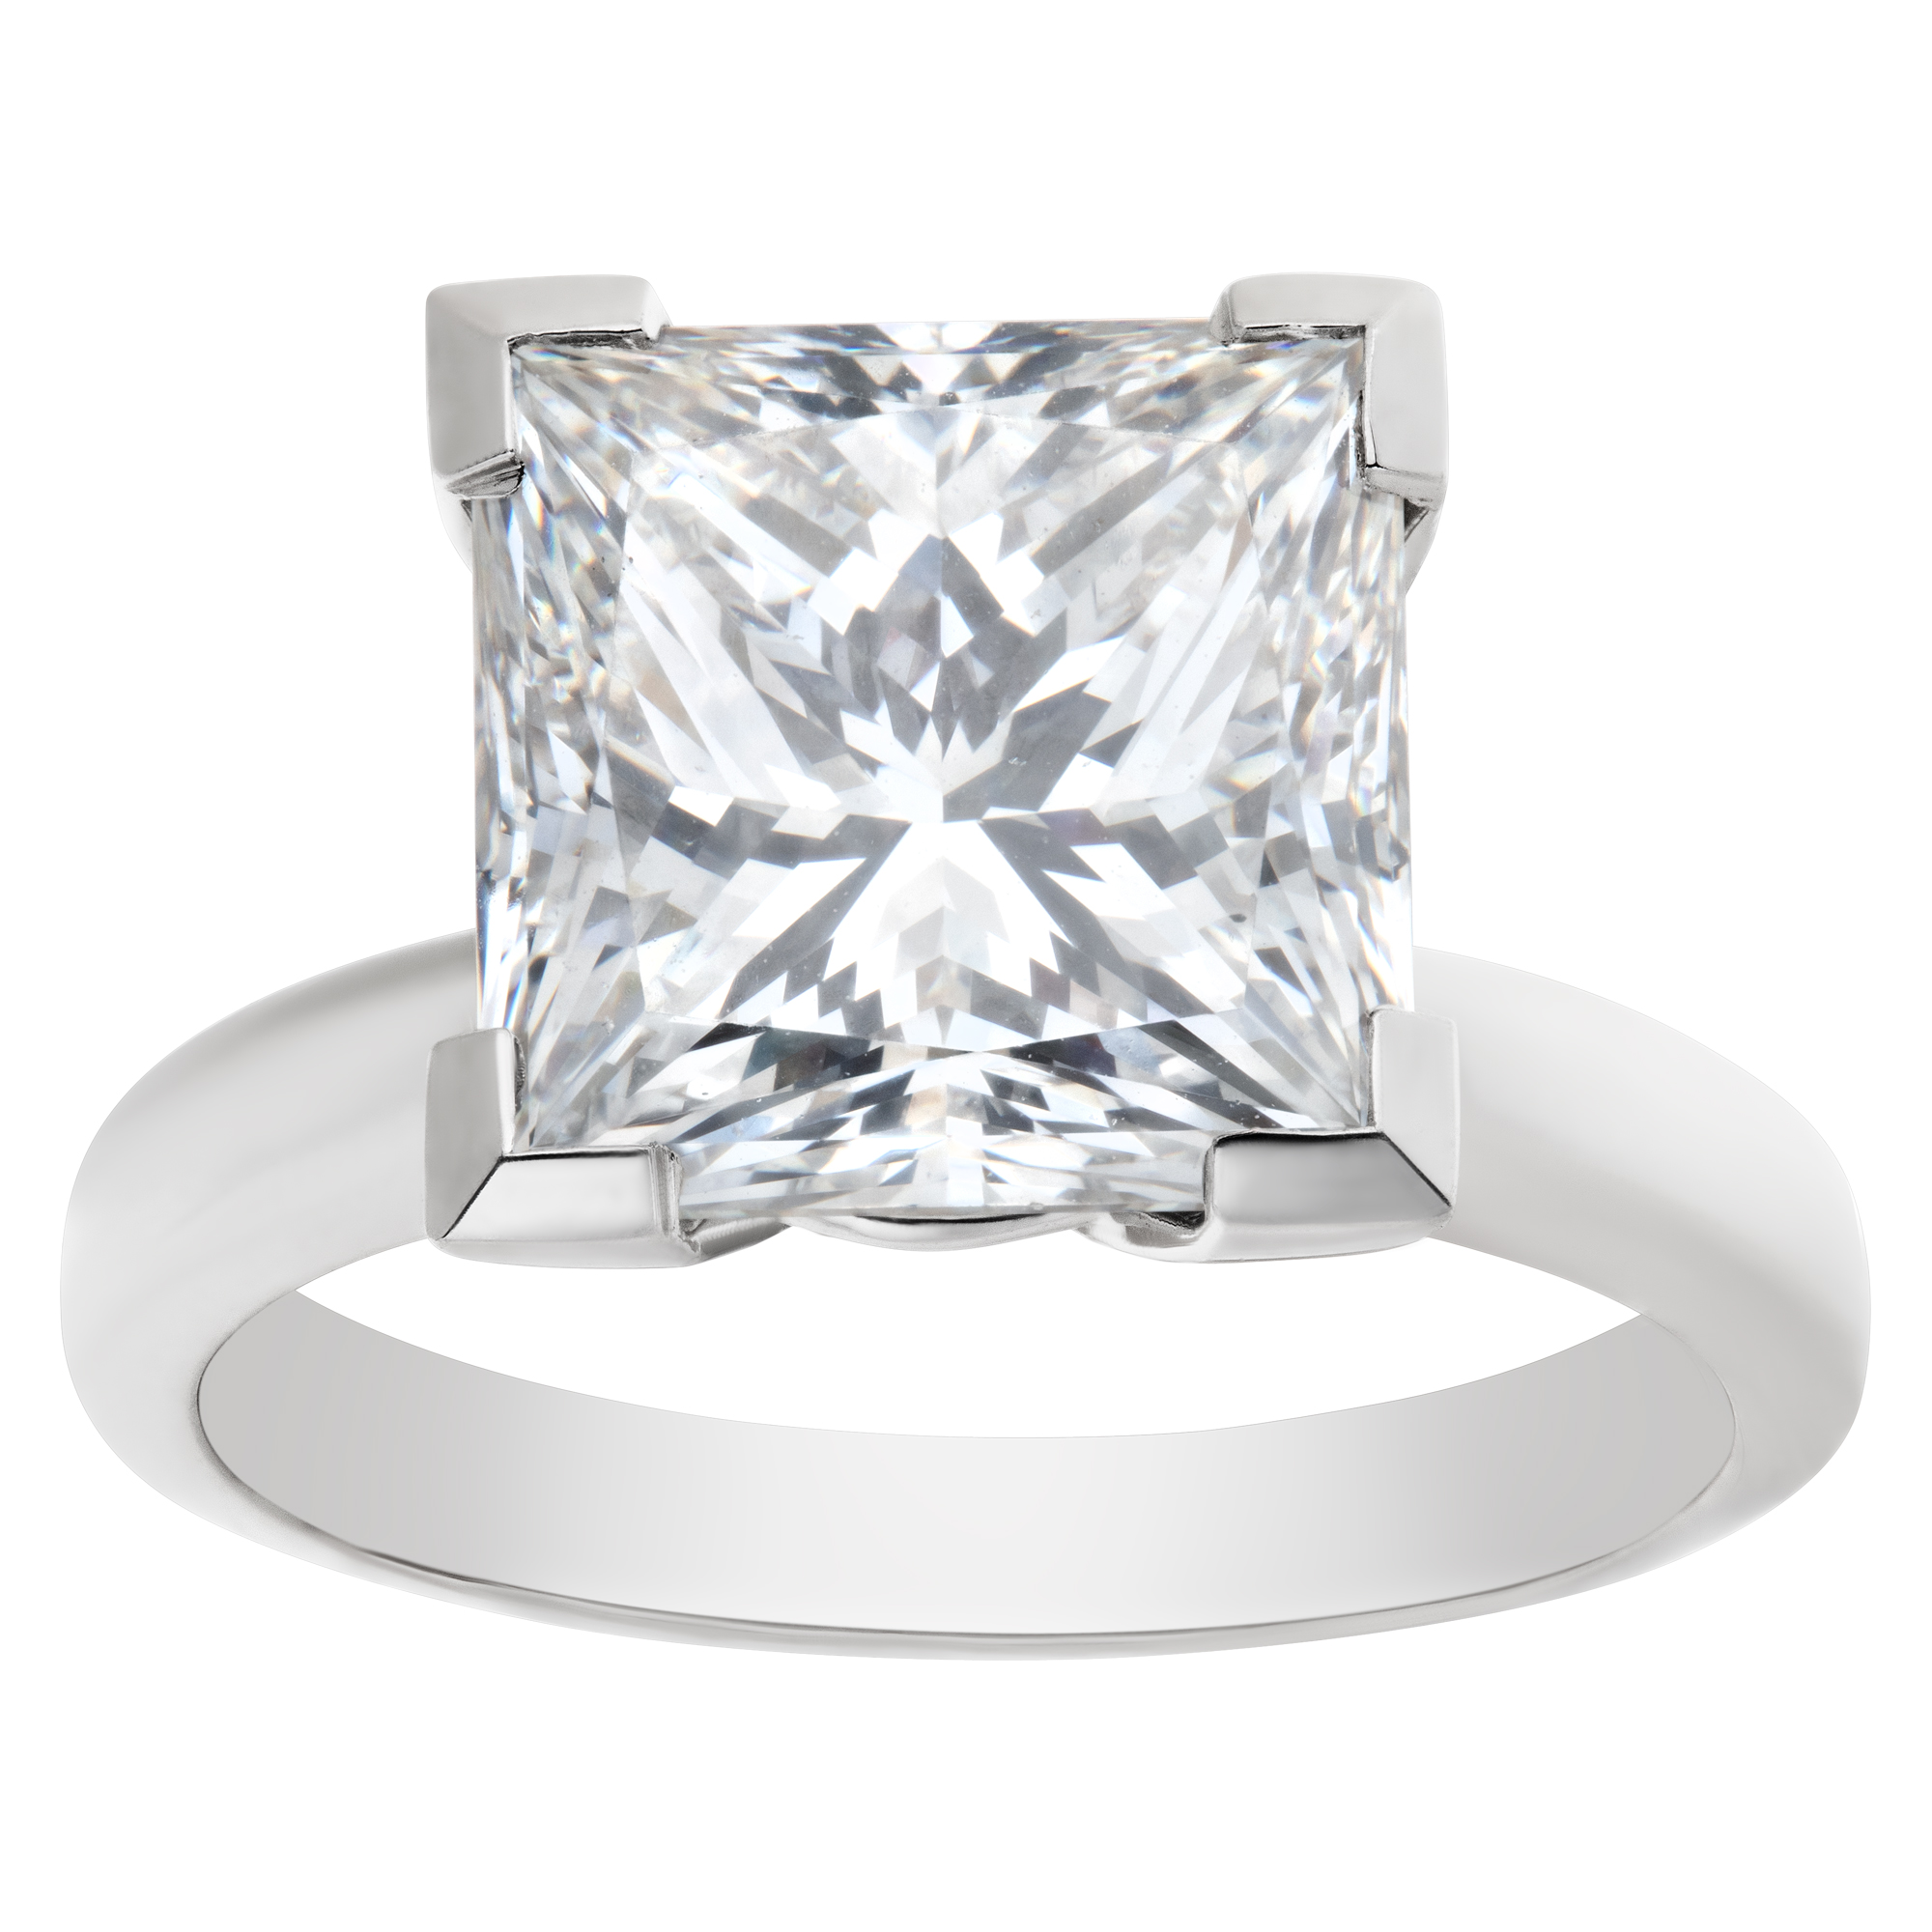 GIA certified square modified brilliant cut diamond 4.67 carat ( F color, VS2 clarity) solitaire ring